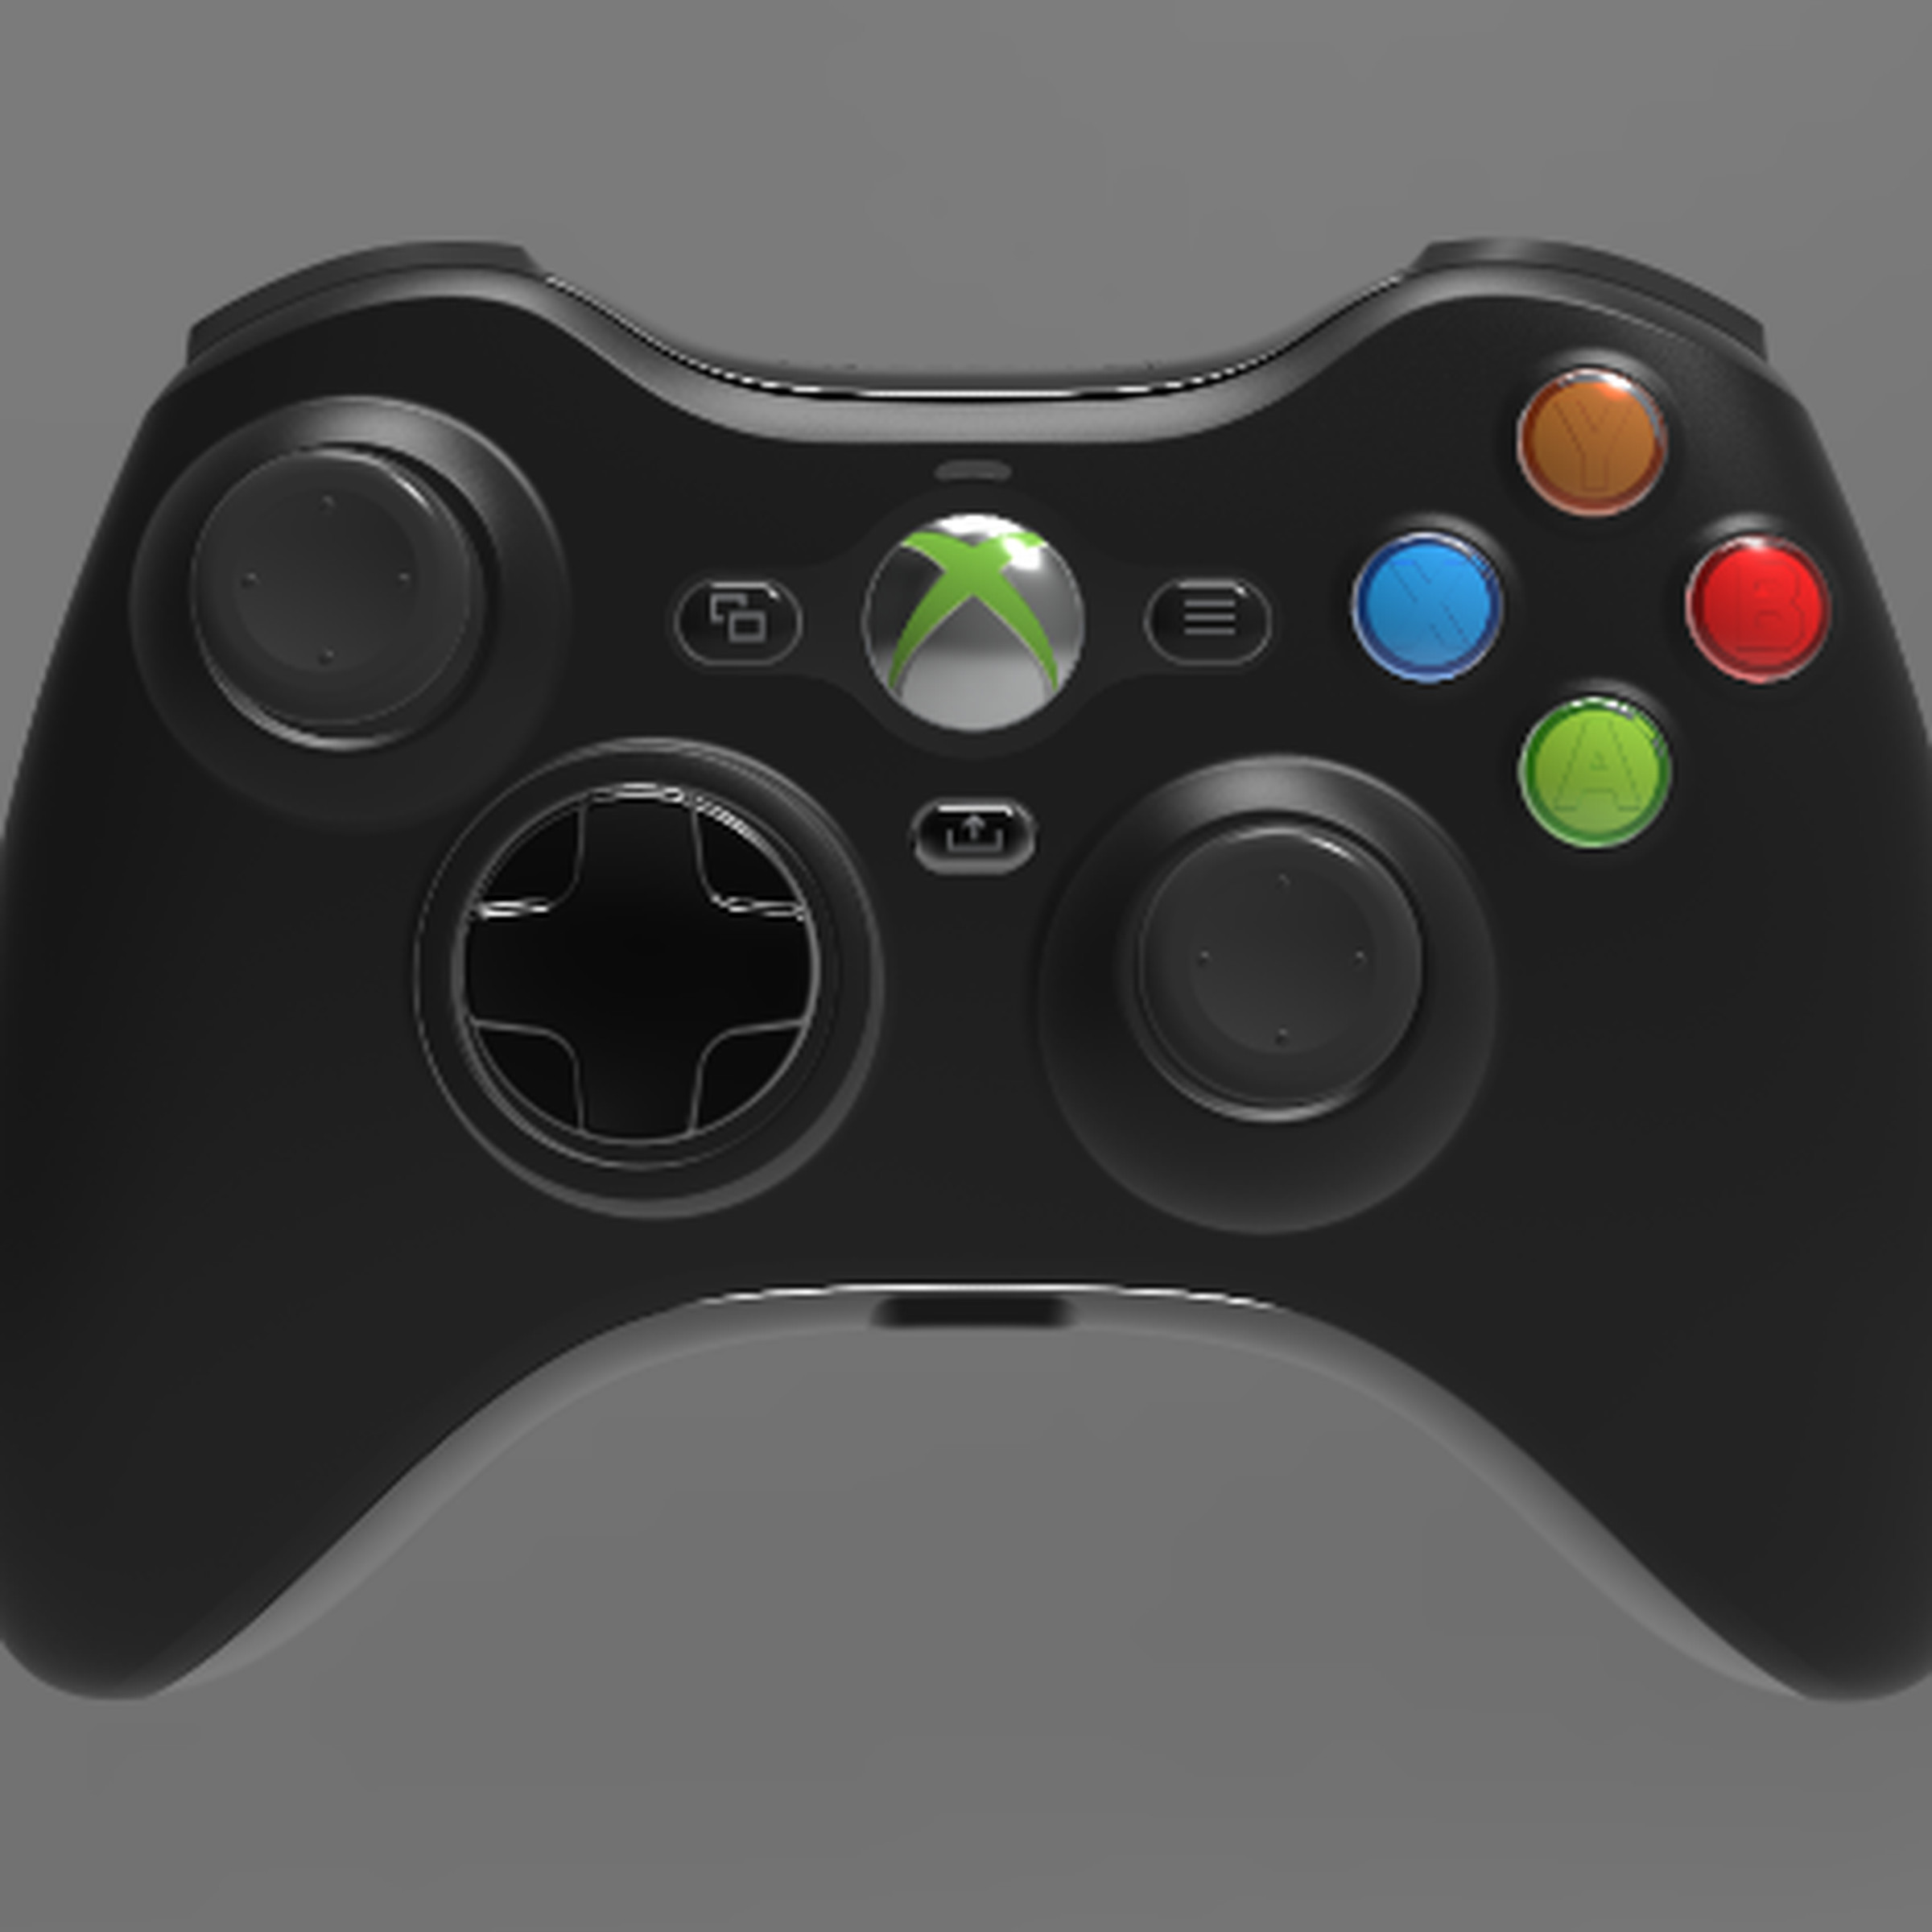 A render of Hyperkin’s Xenon Xbox 360 reissue controller, in black.